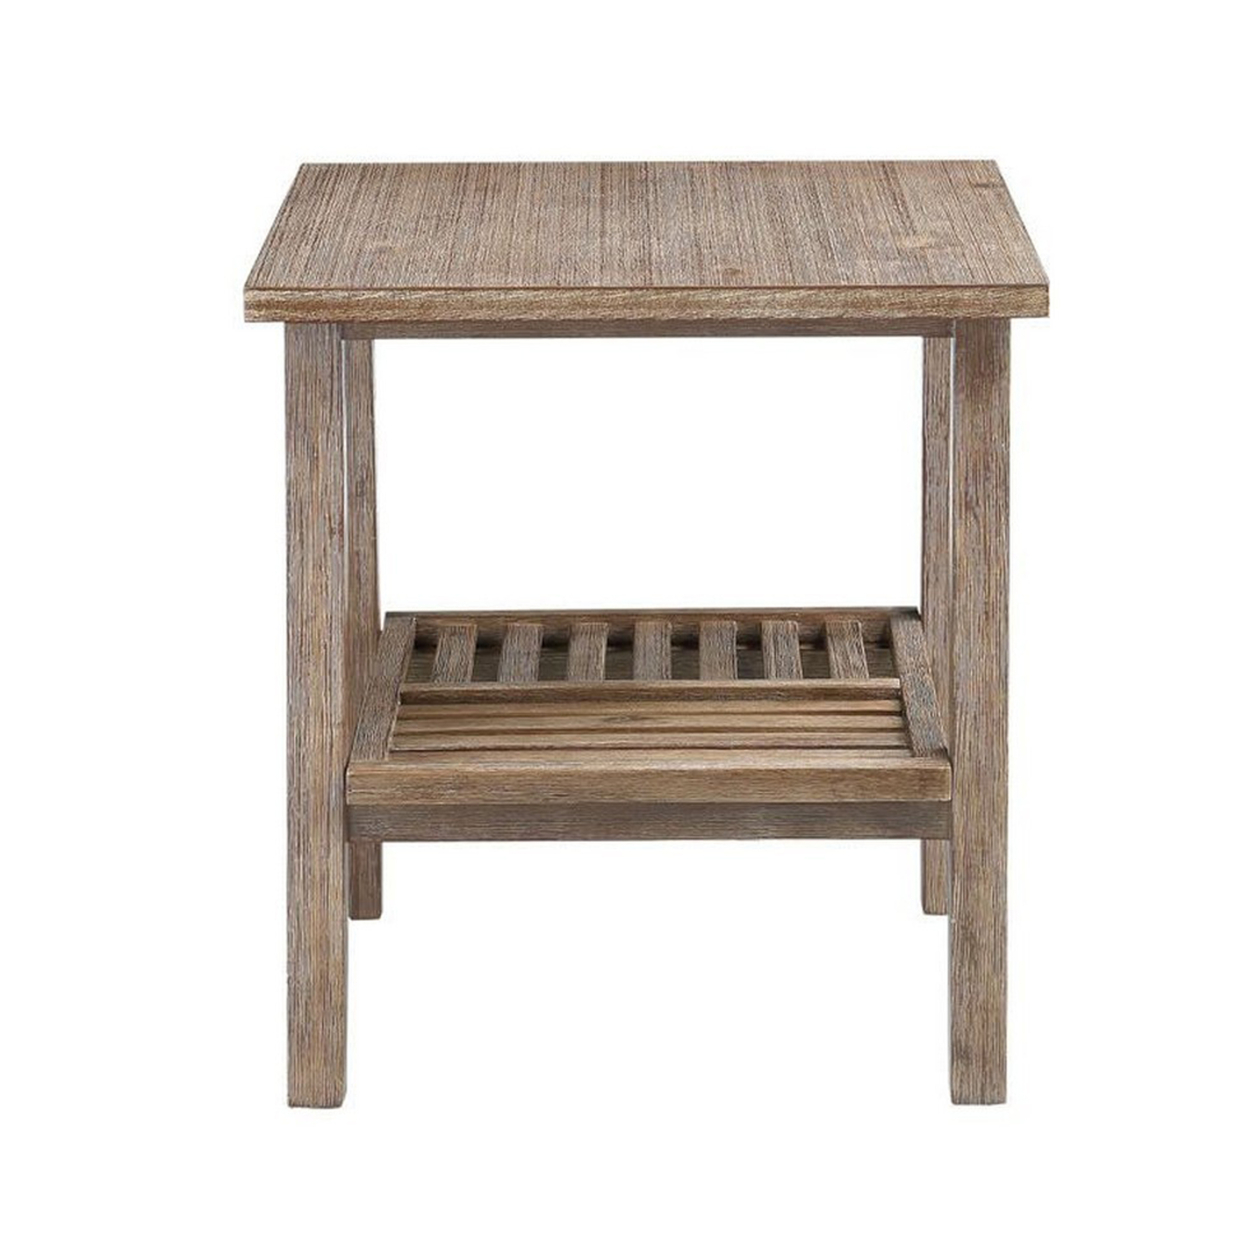 Farmhouse Wooden End Table With Slatted Bottom Shelf, Rustic Brown- Saltoro Sherpi